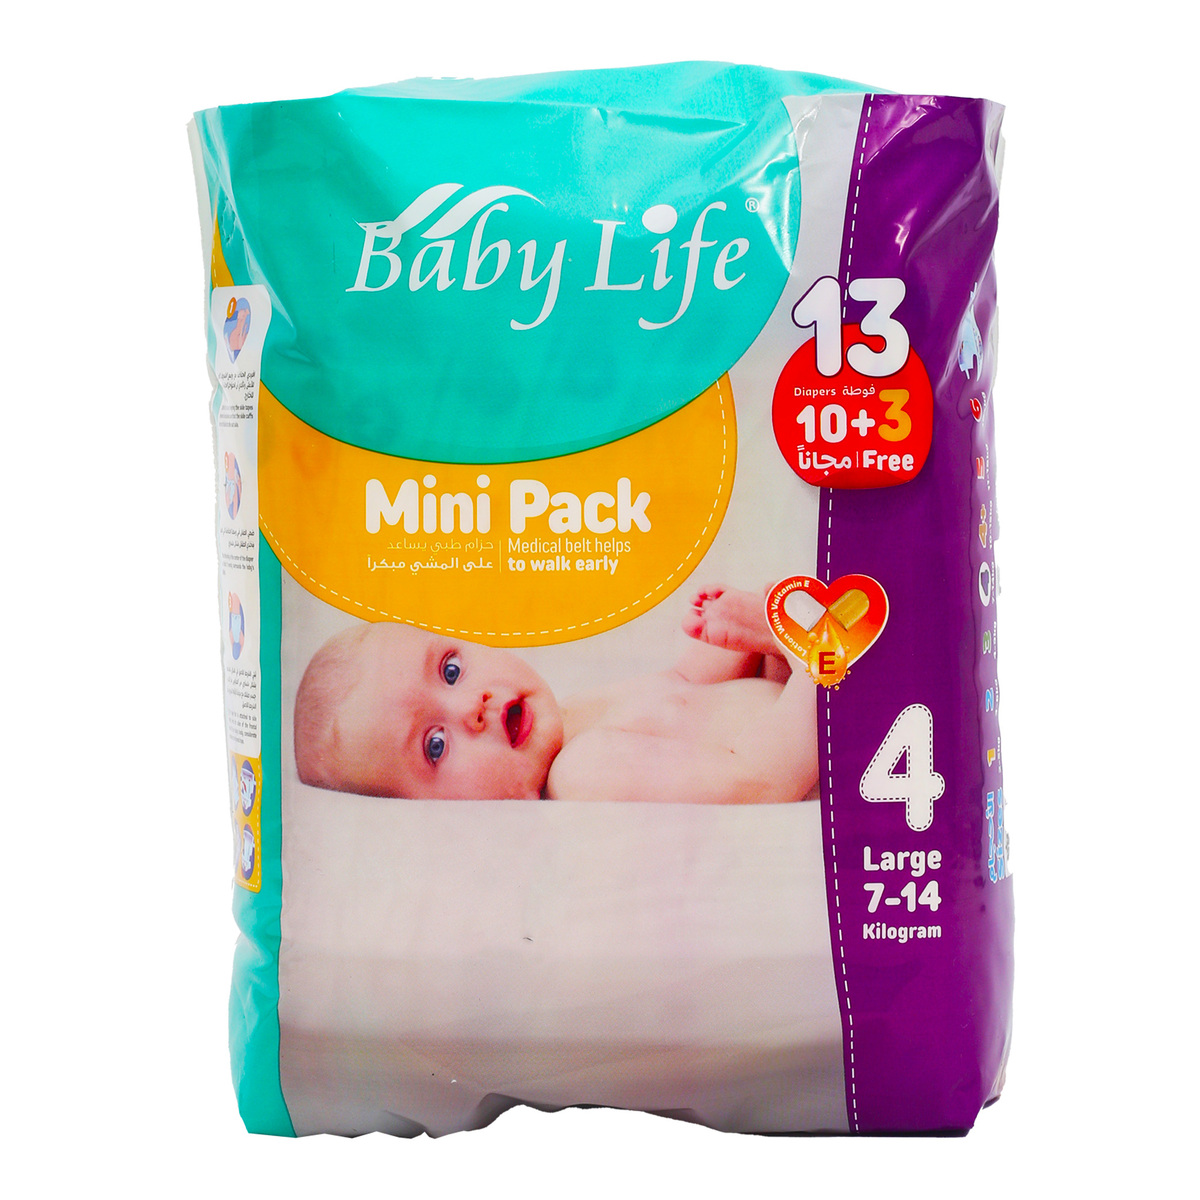 Baby Life Diaper Large Size 4 7-14 kg 10 + 3 pcs